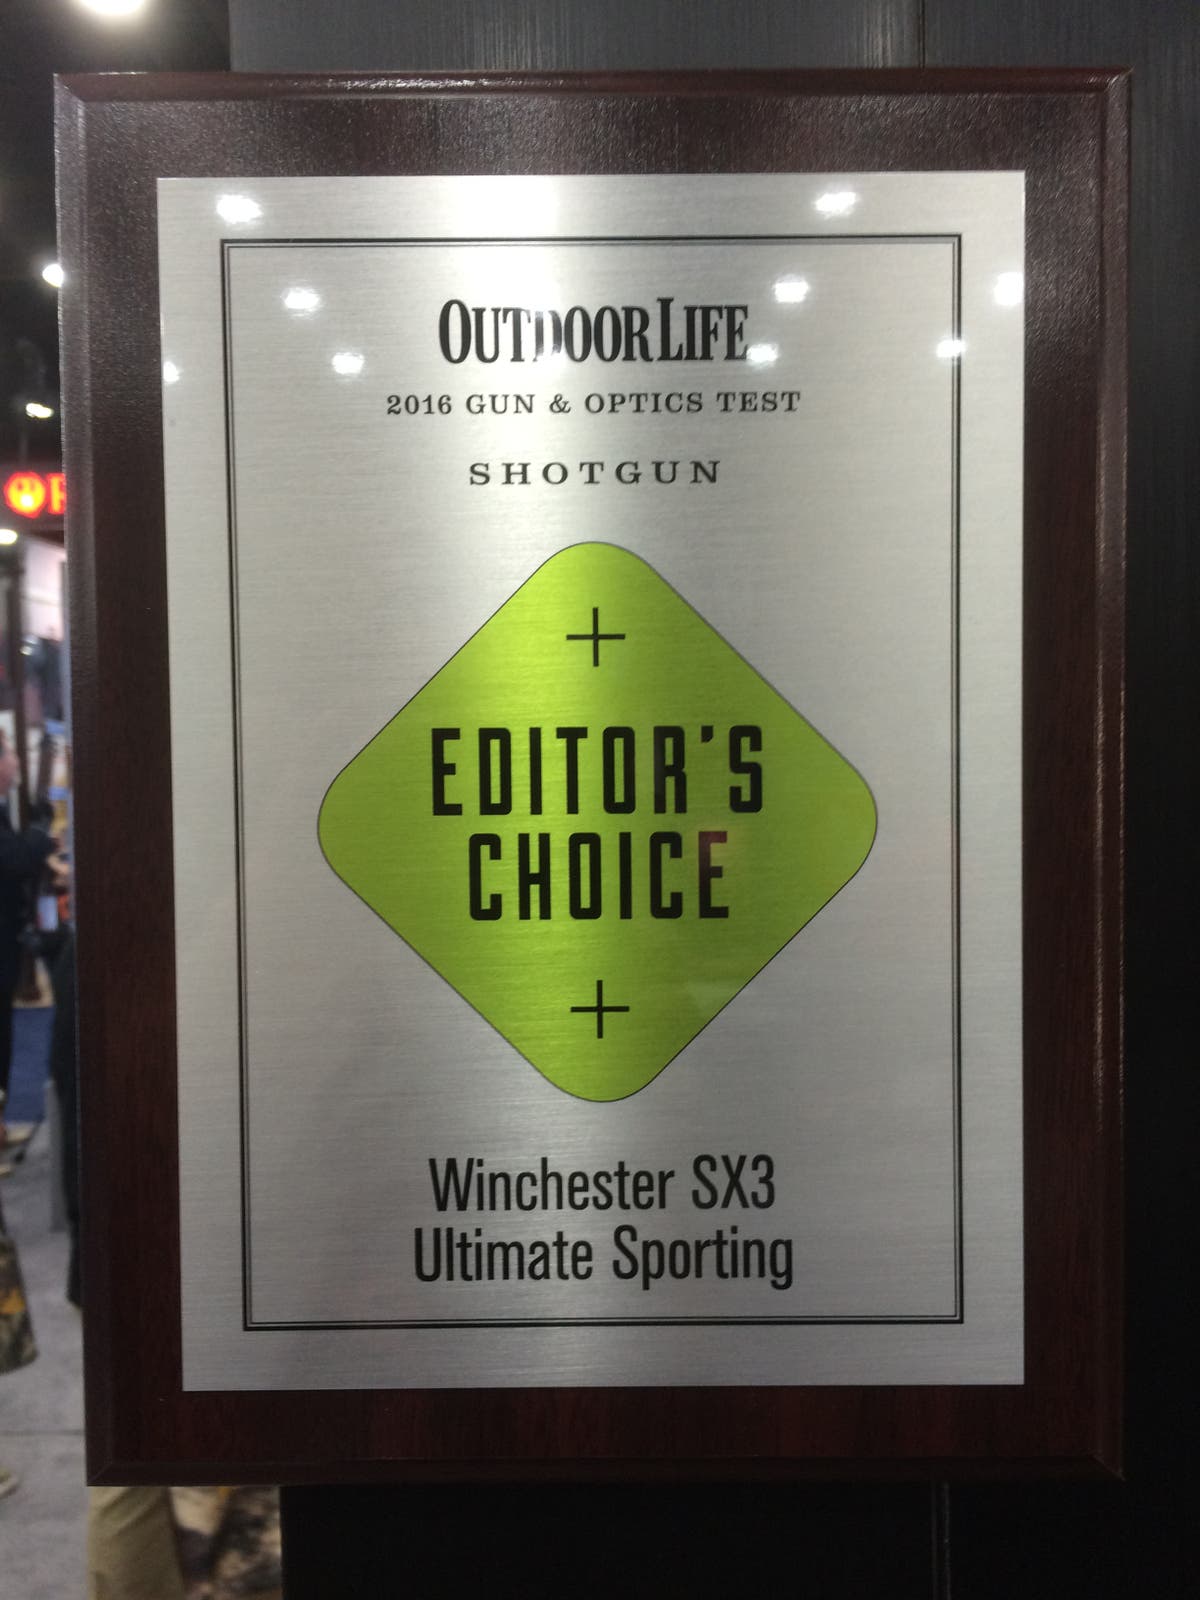 Winchester SX3 Ultimate Sporting Award